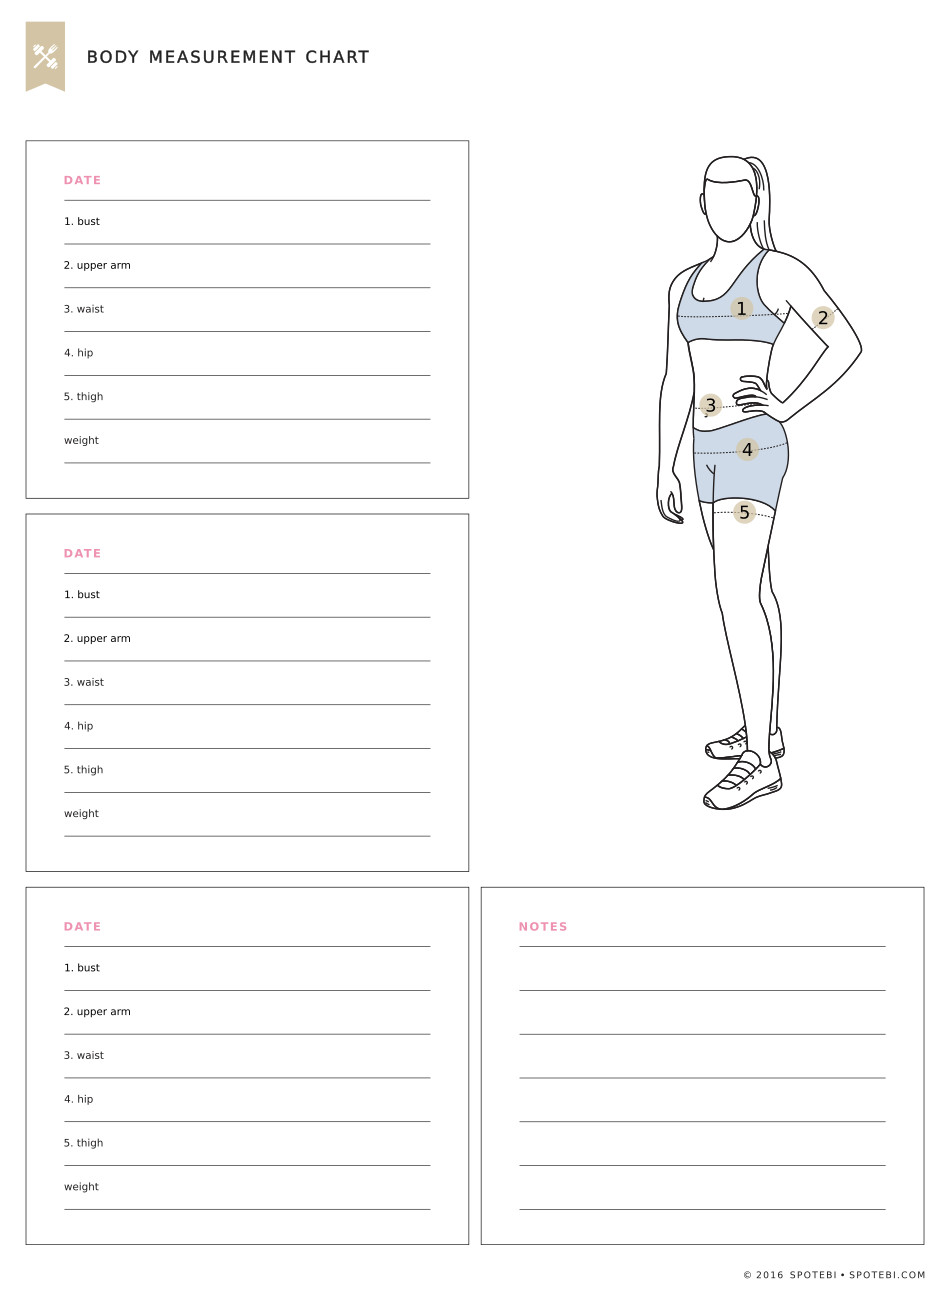 Body Measurement Chart | Fitness Tracker -   13 fitness Tracker body measurements ideas